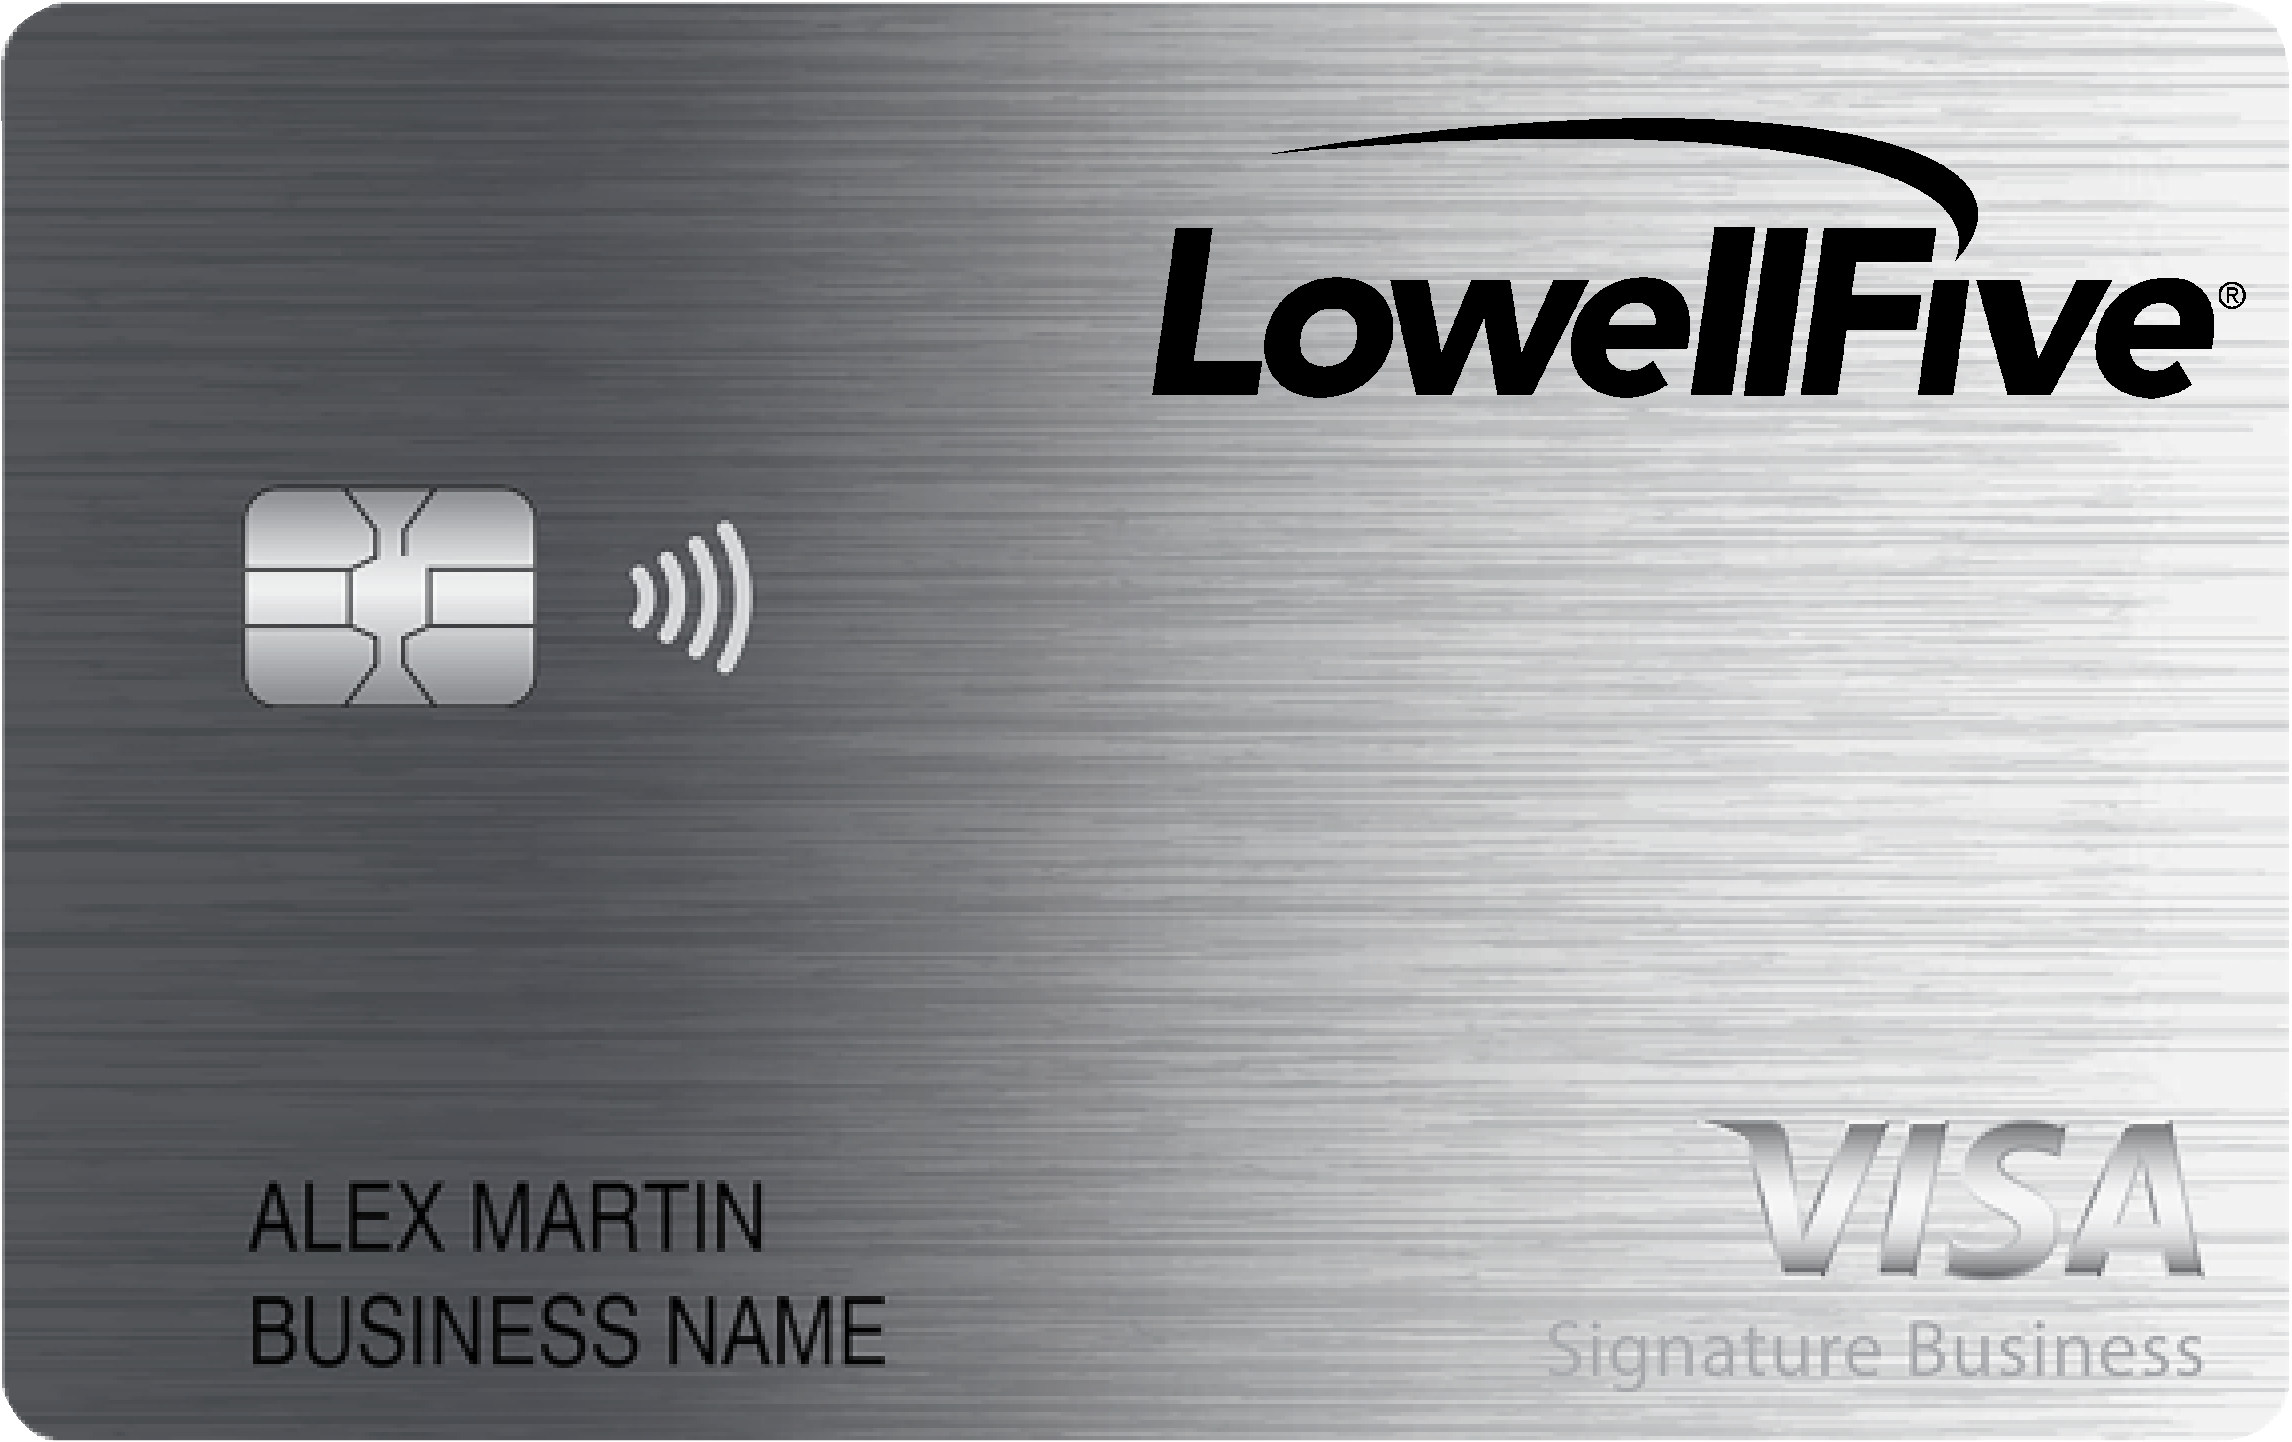 Lowell Five Bank Smart Business Rewards Card